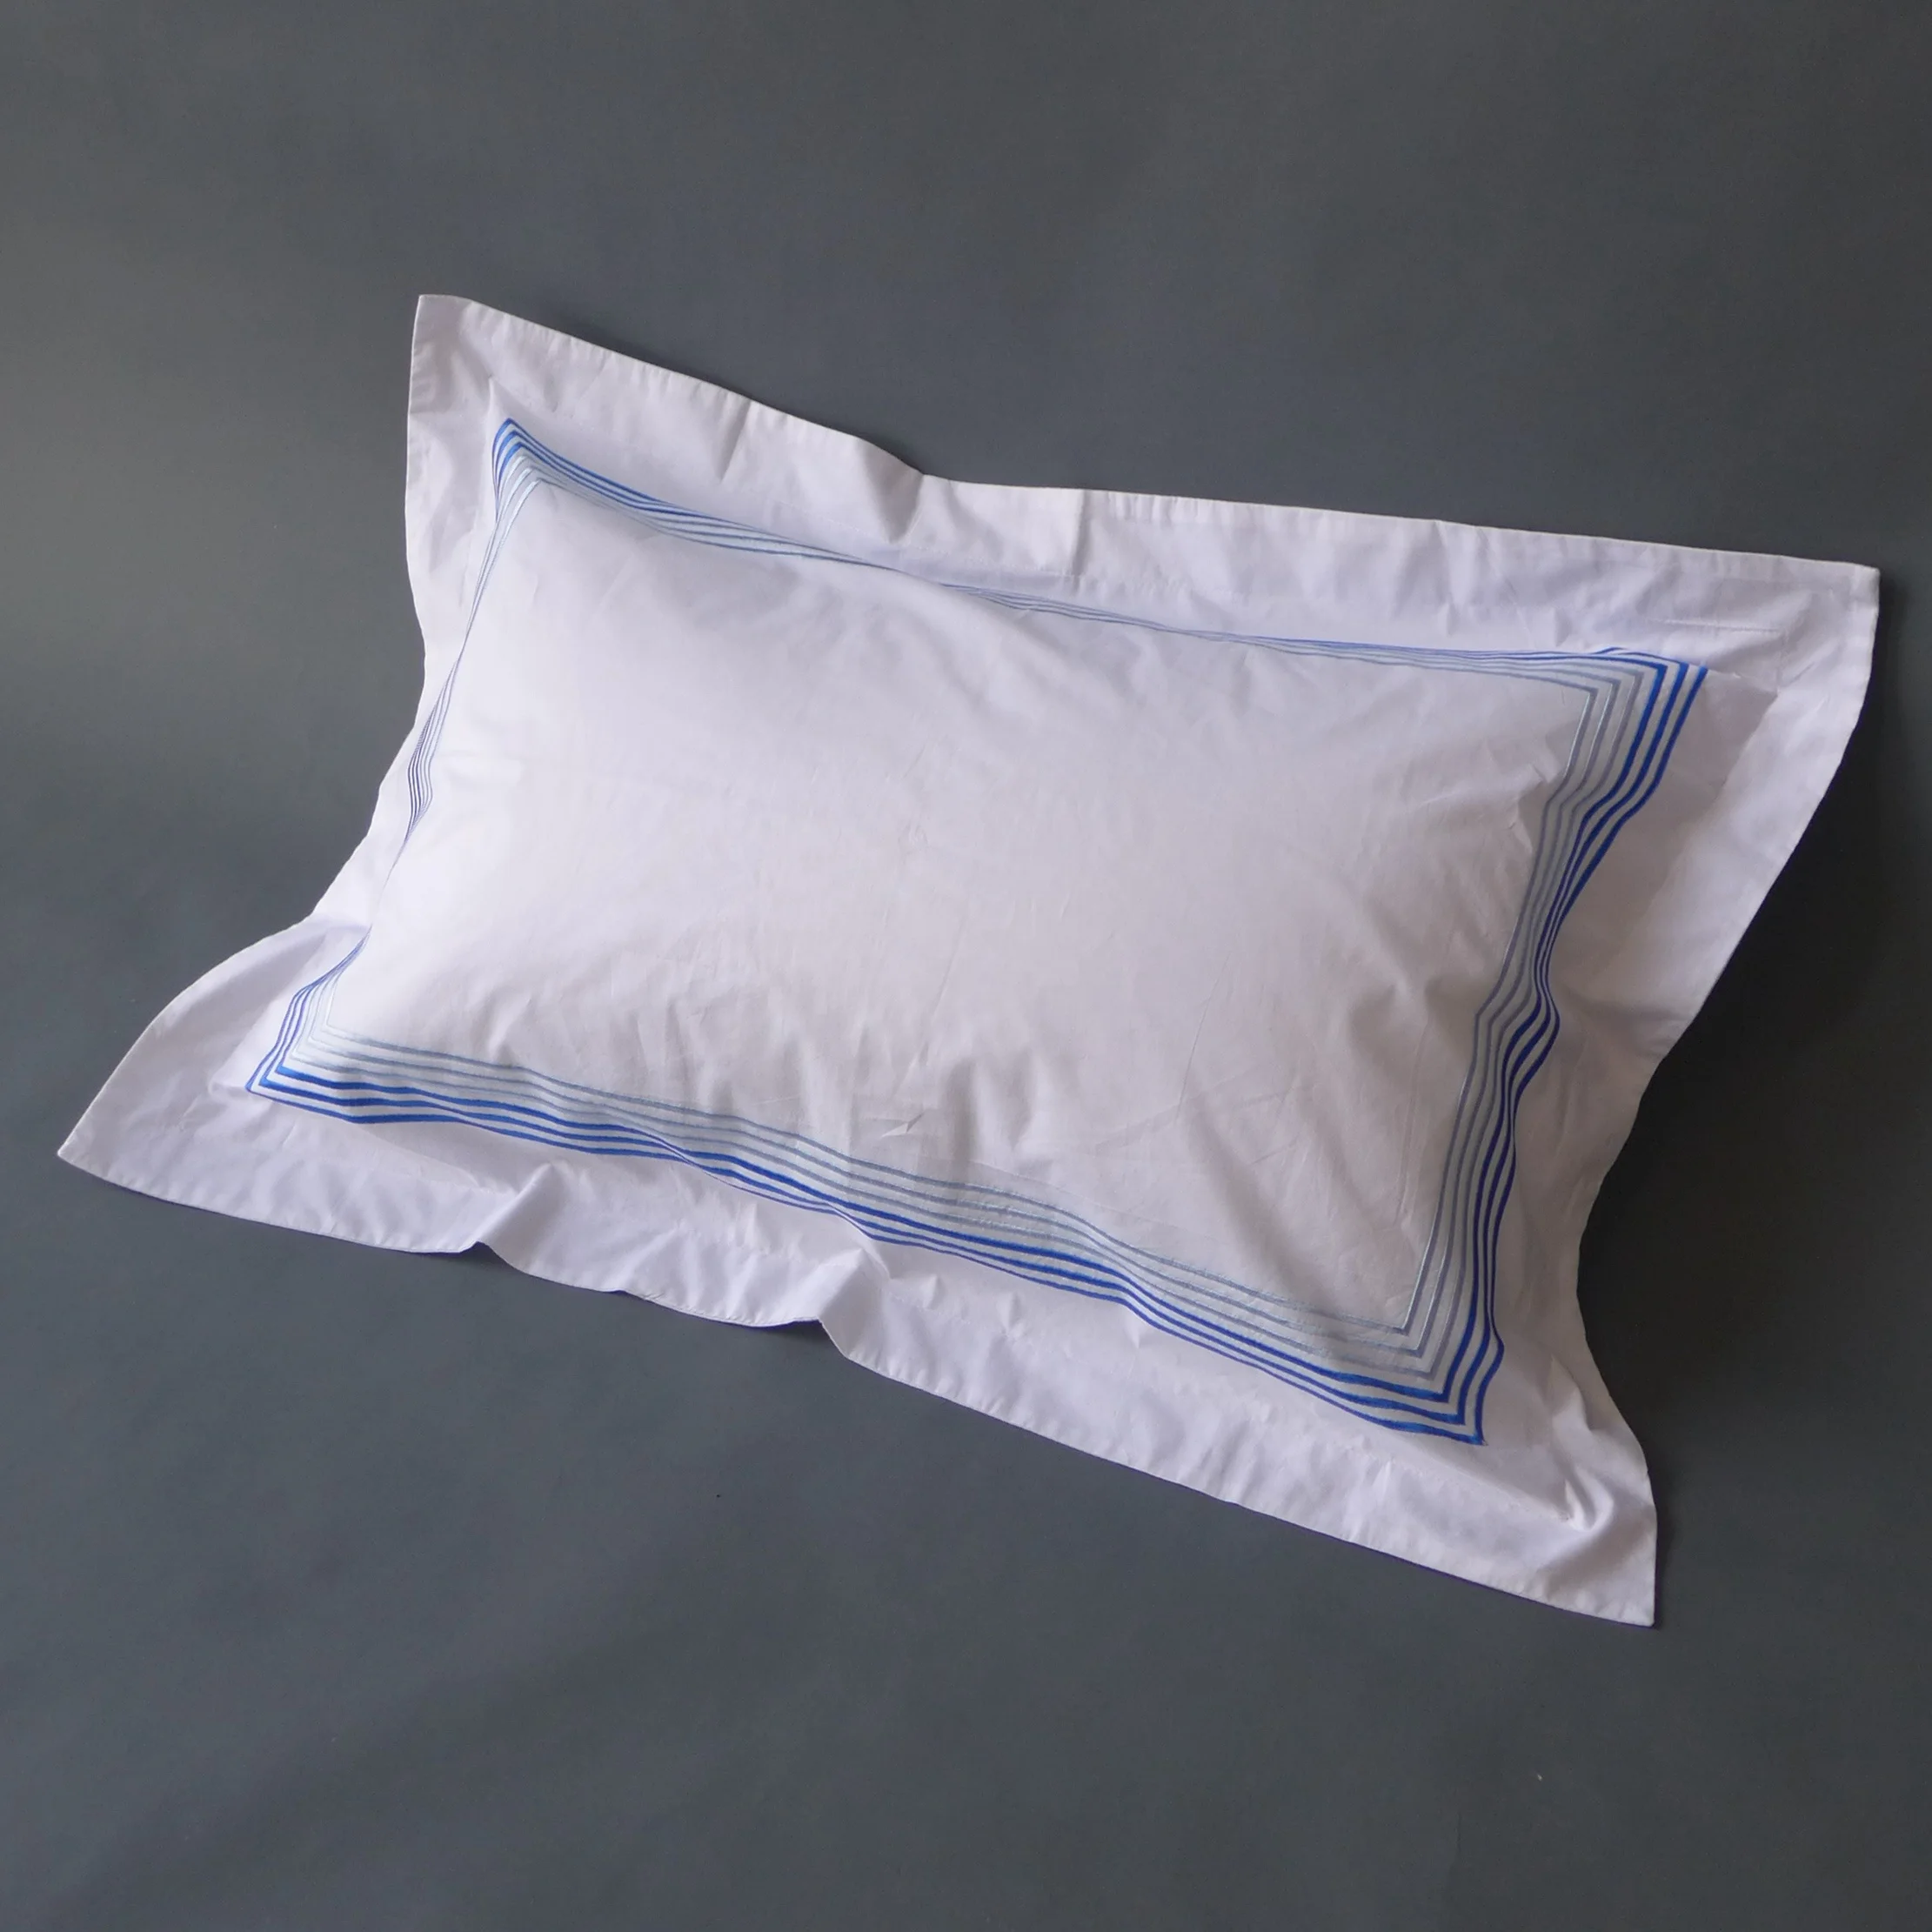 100% cotton duvet cover set with embroidery pillowcase pillowsham